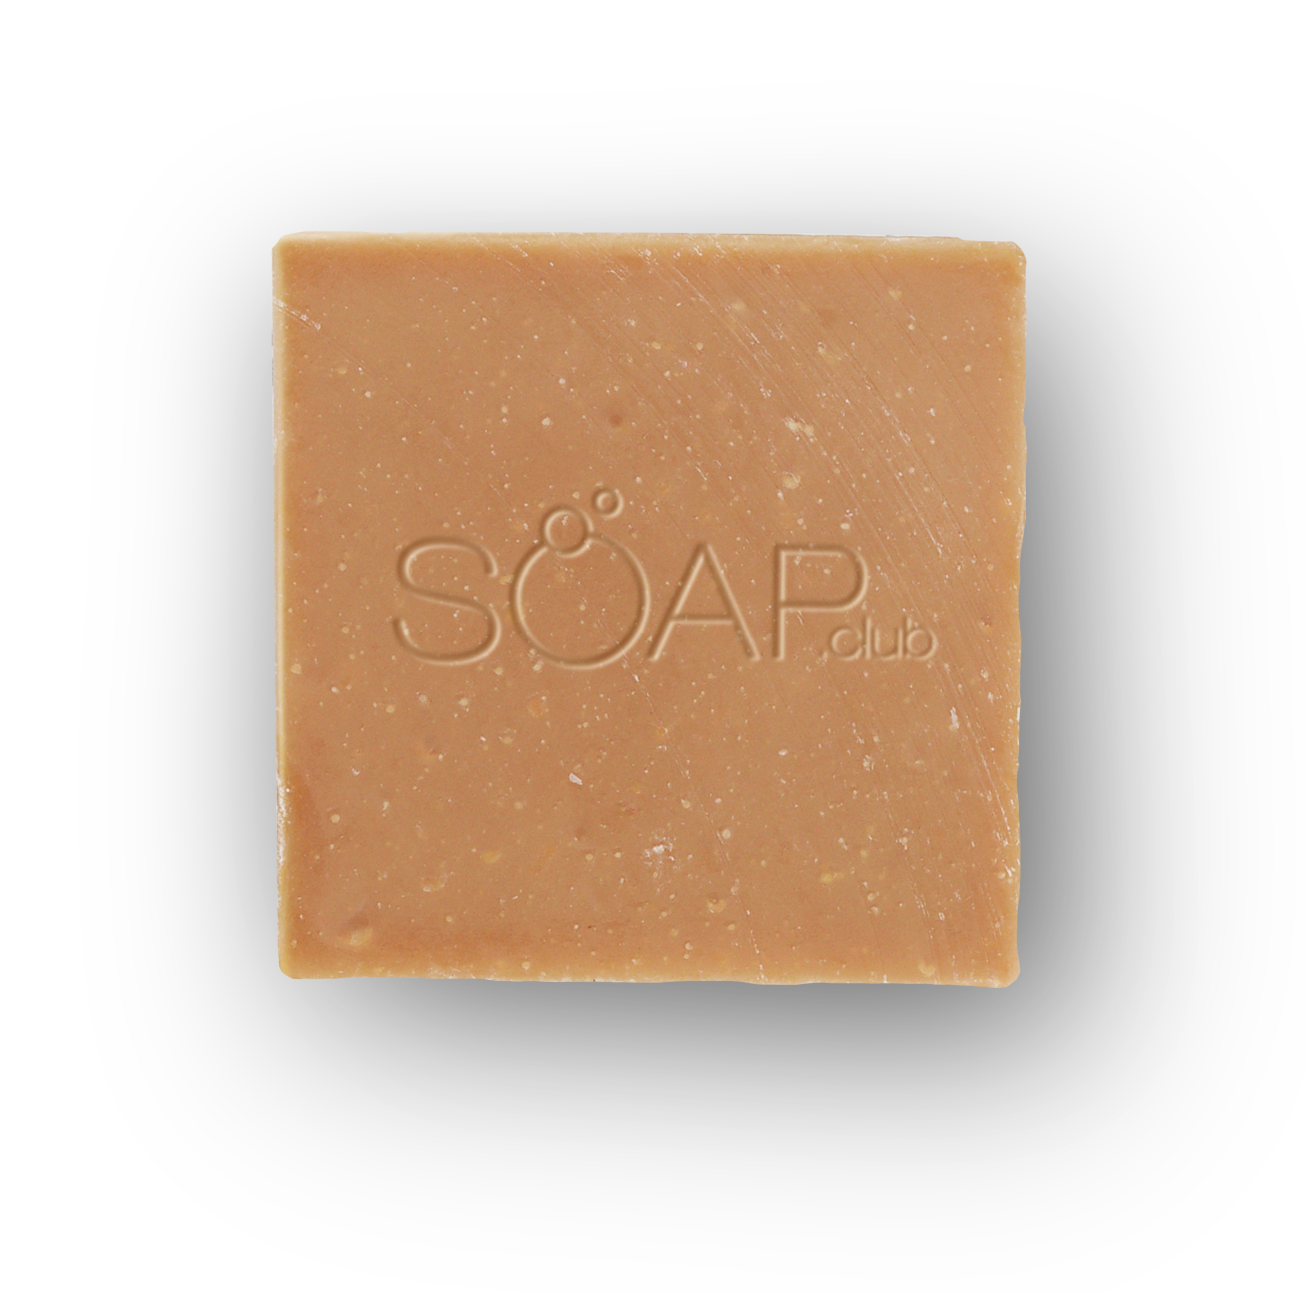 olive oil natural soap shea butter soap natural soap shop natural soap for women lady soap